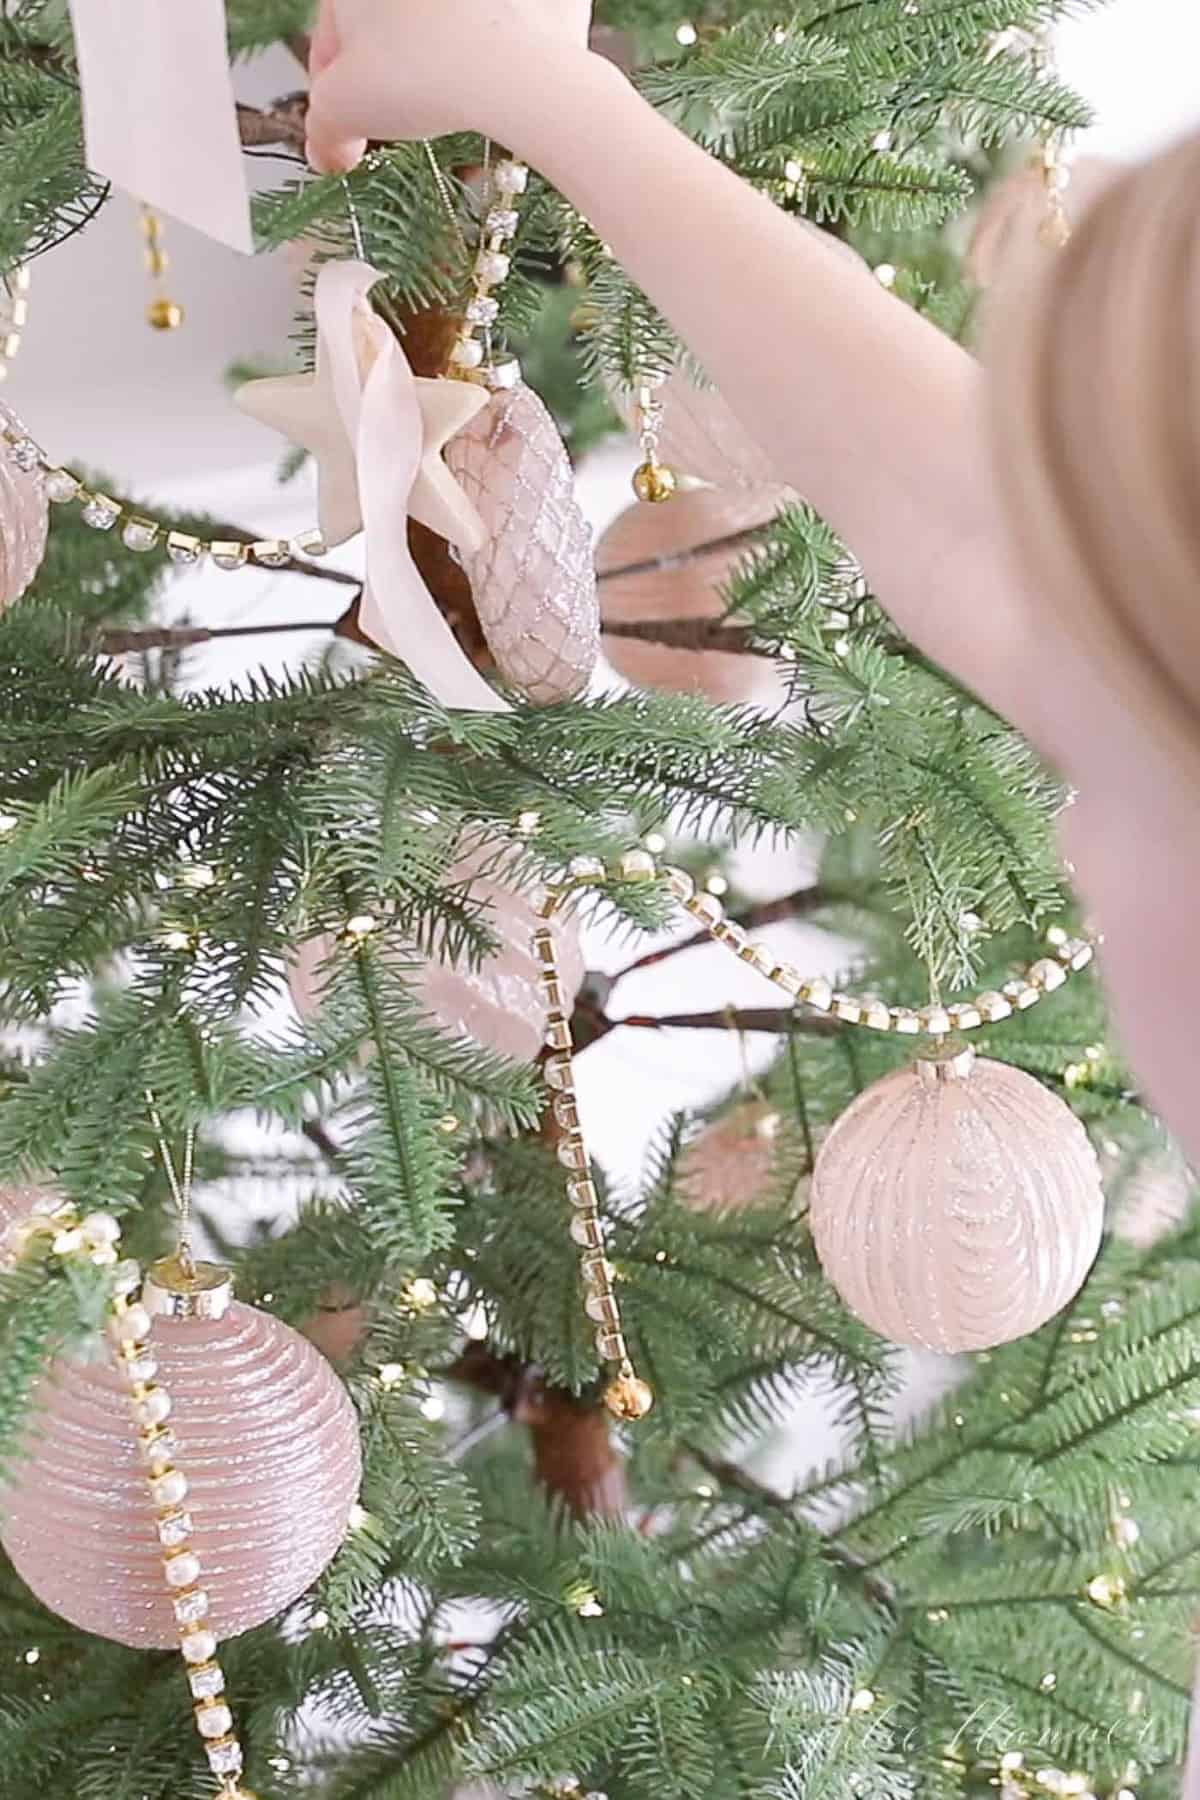 Tepi wajah dan tangan seorang gadis kecil saat dia meletakkan hiasan adonan garam buatan sendiri di pohon Natal.